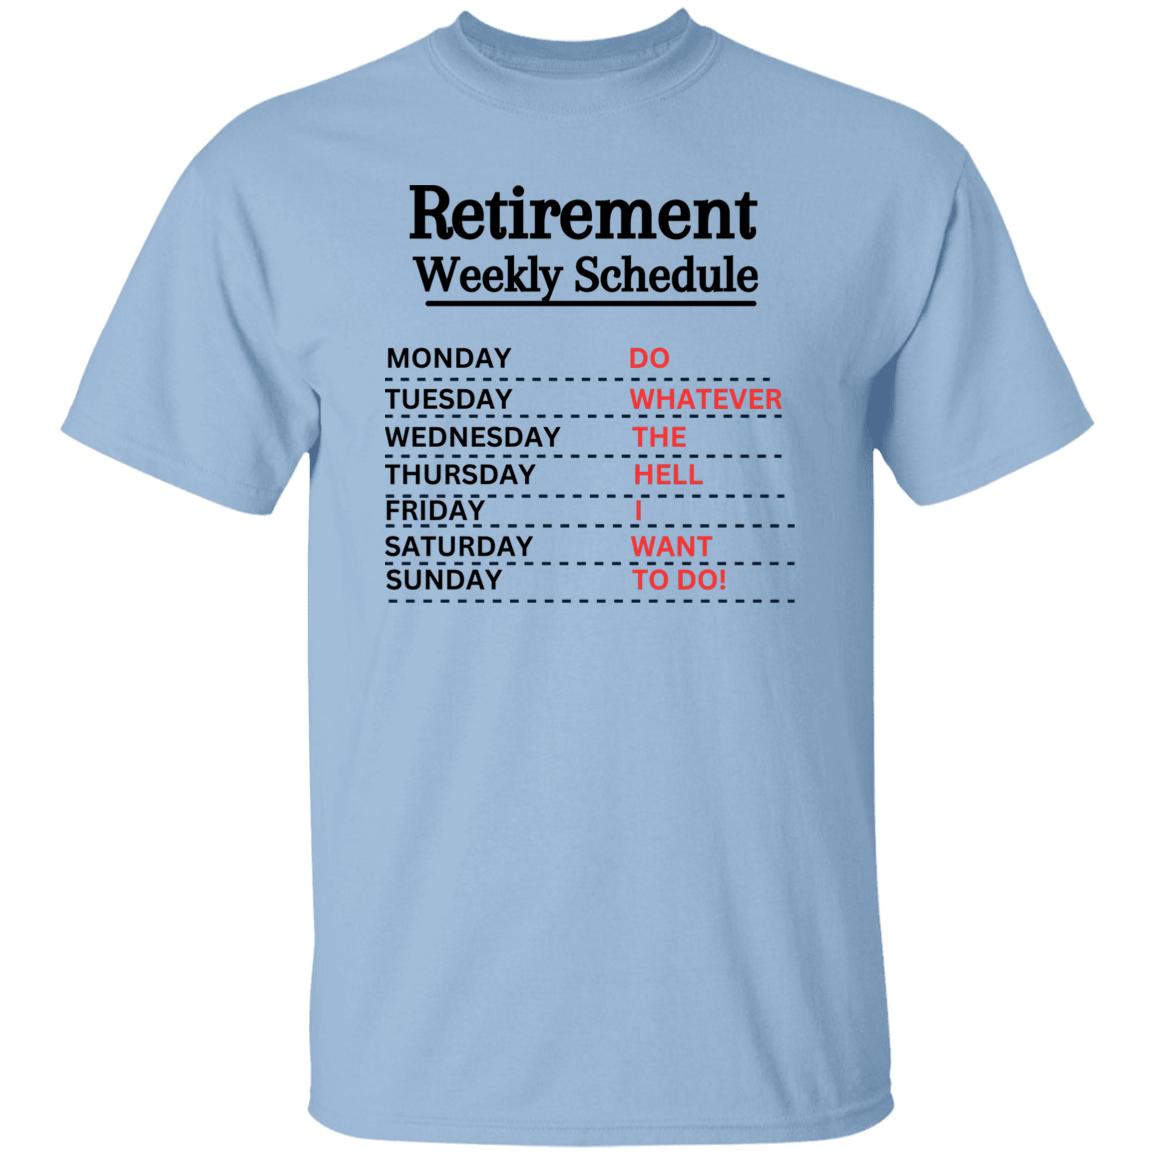 Retirement Weekly Schedule T-Shirt